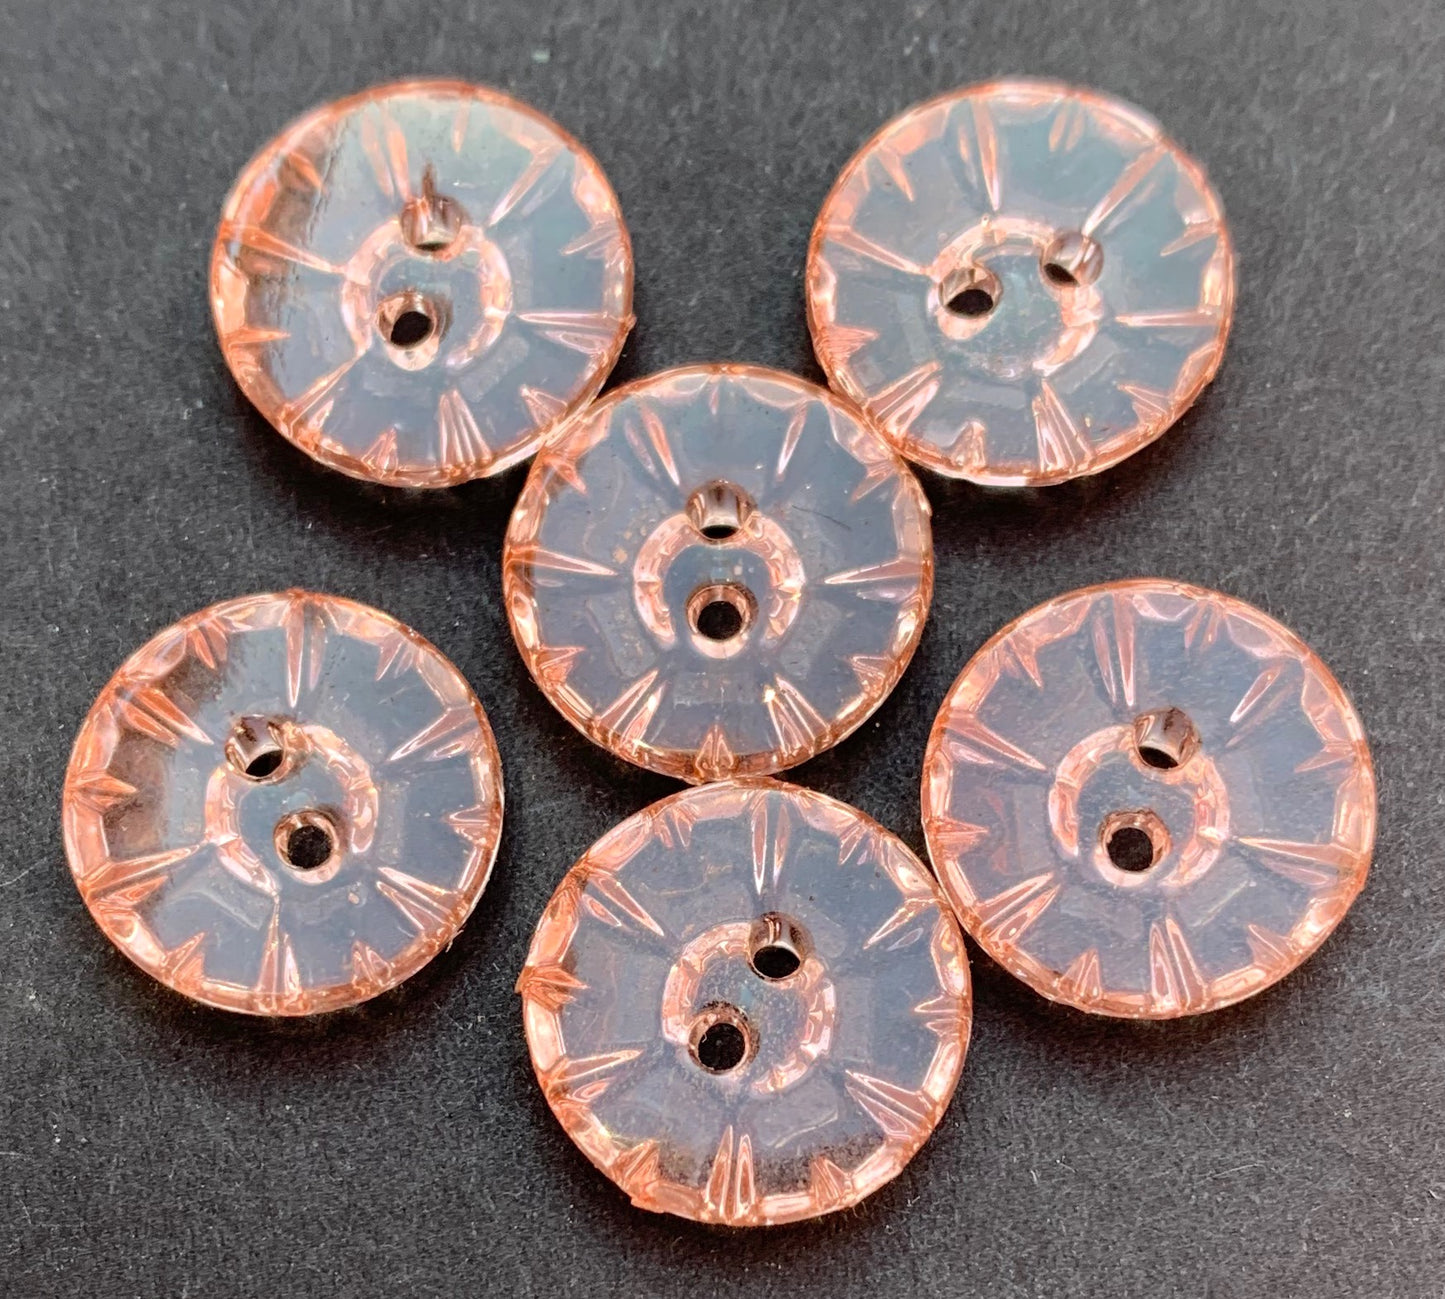 6 Shimmering Boudoir Pink Vintage Glass 1.3cm Buttons